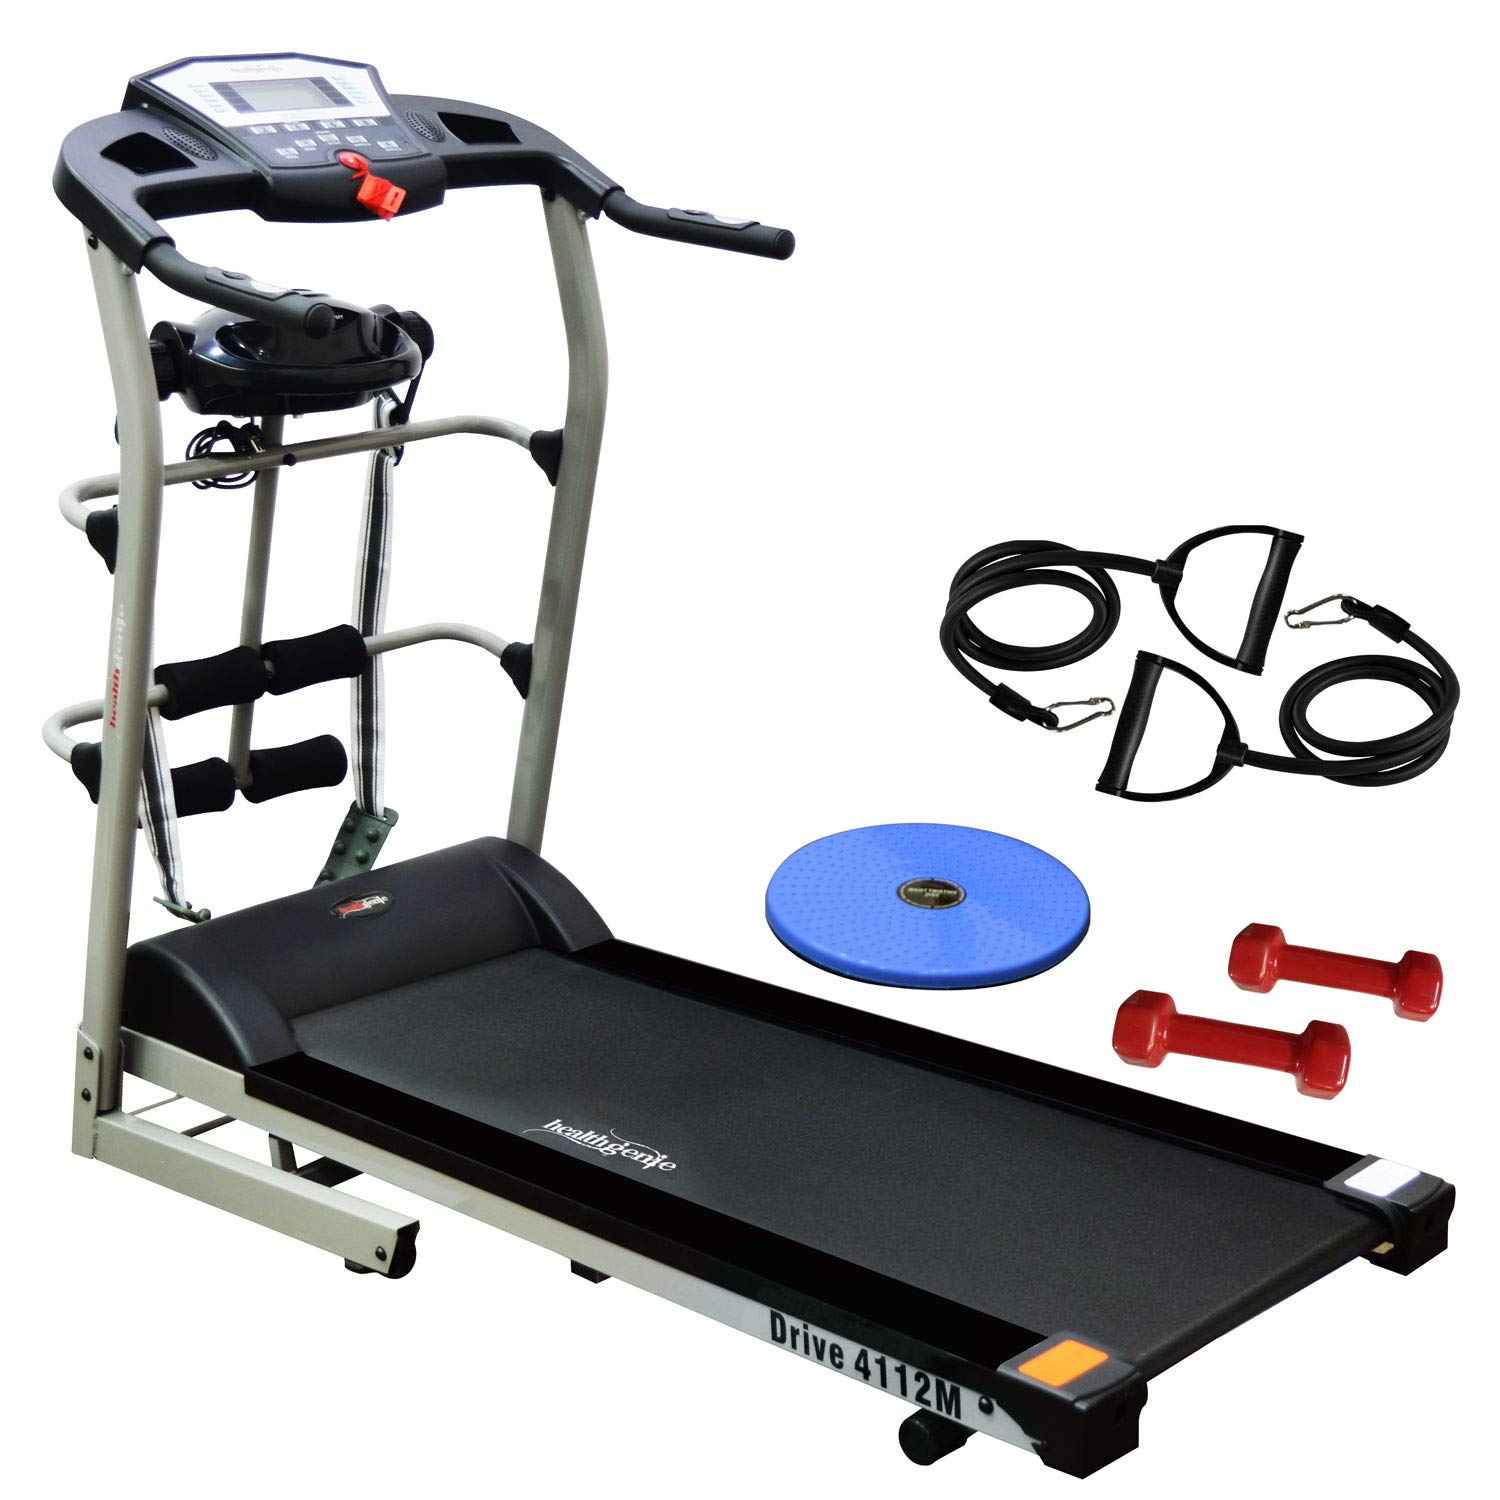 Healthgenie 4112M Treadmill